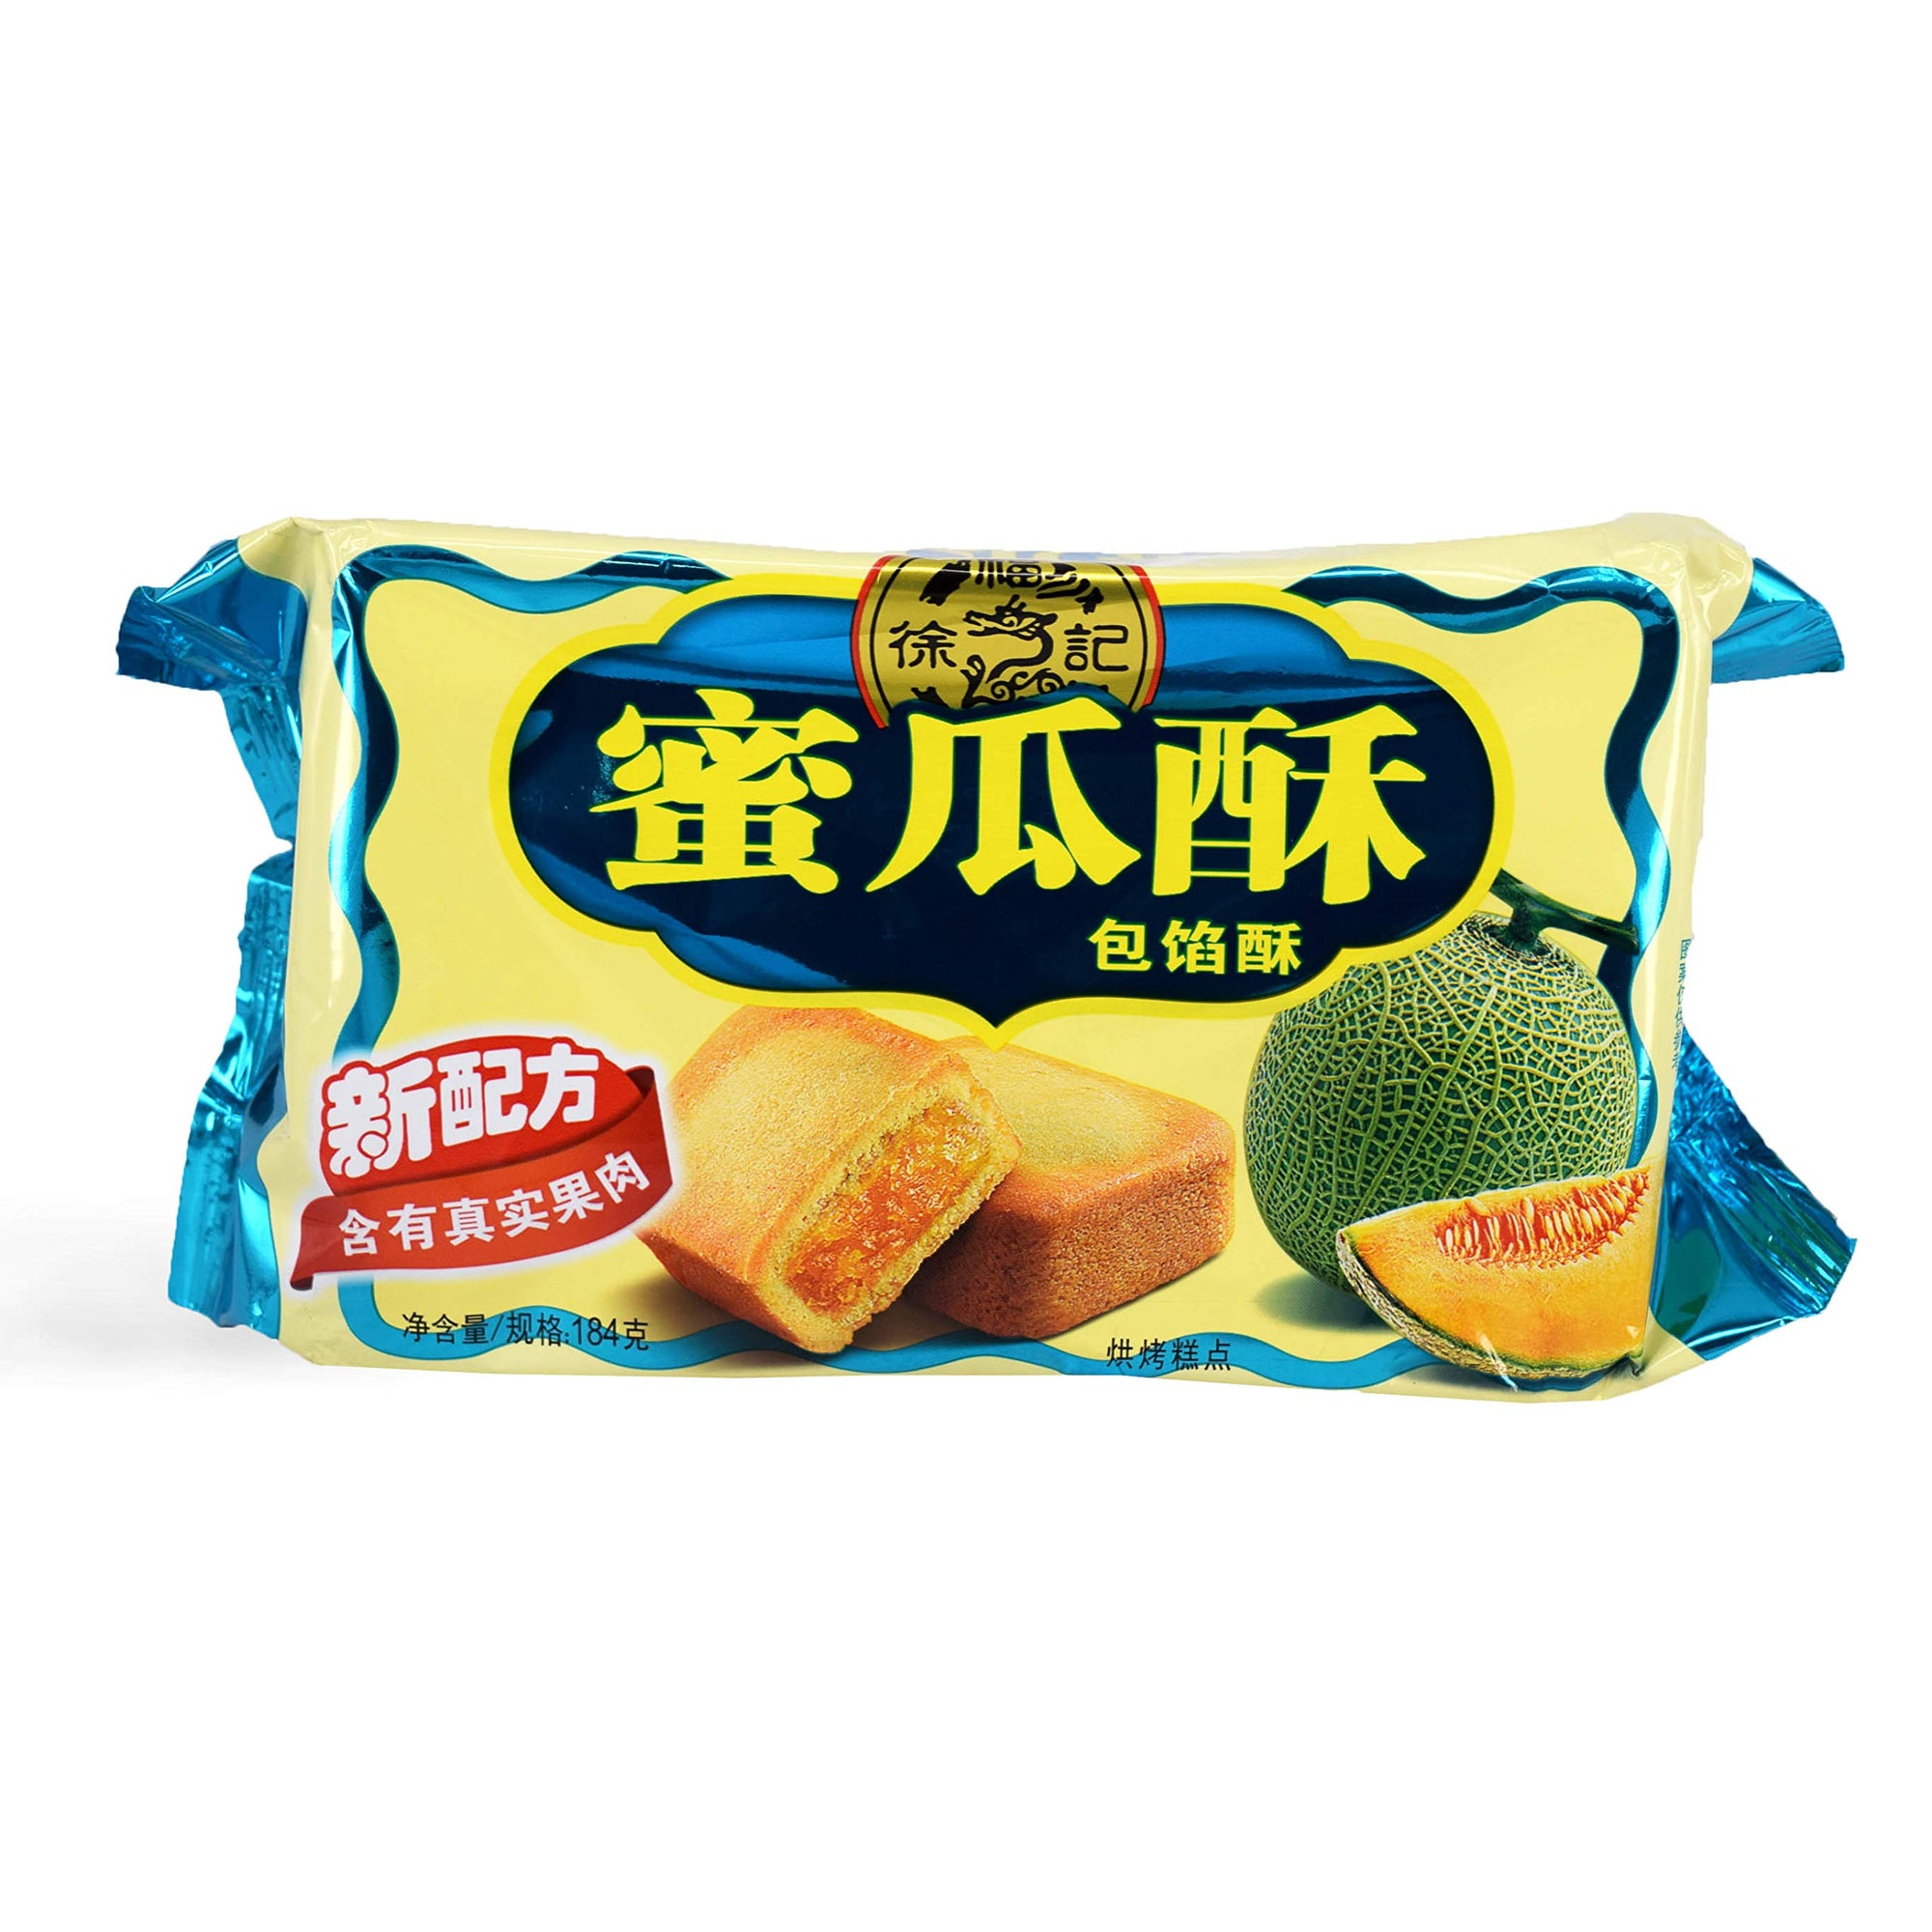 XuFuJi Cookie 徐福记 蜜瓜酥 Melon Cookie 182g (pack of 2)